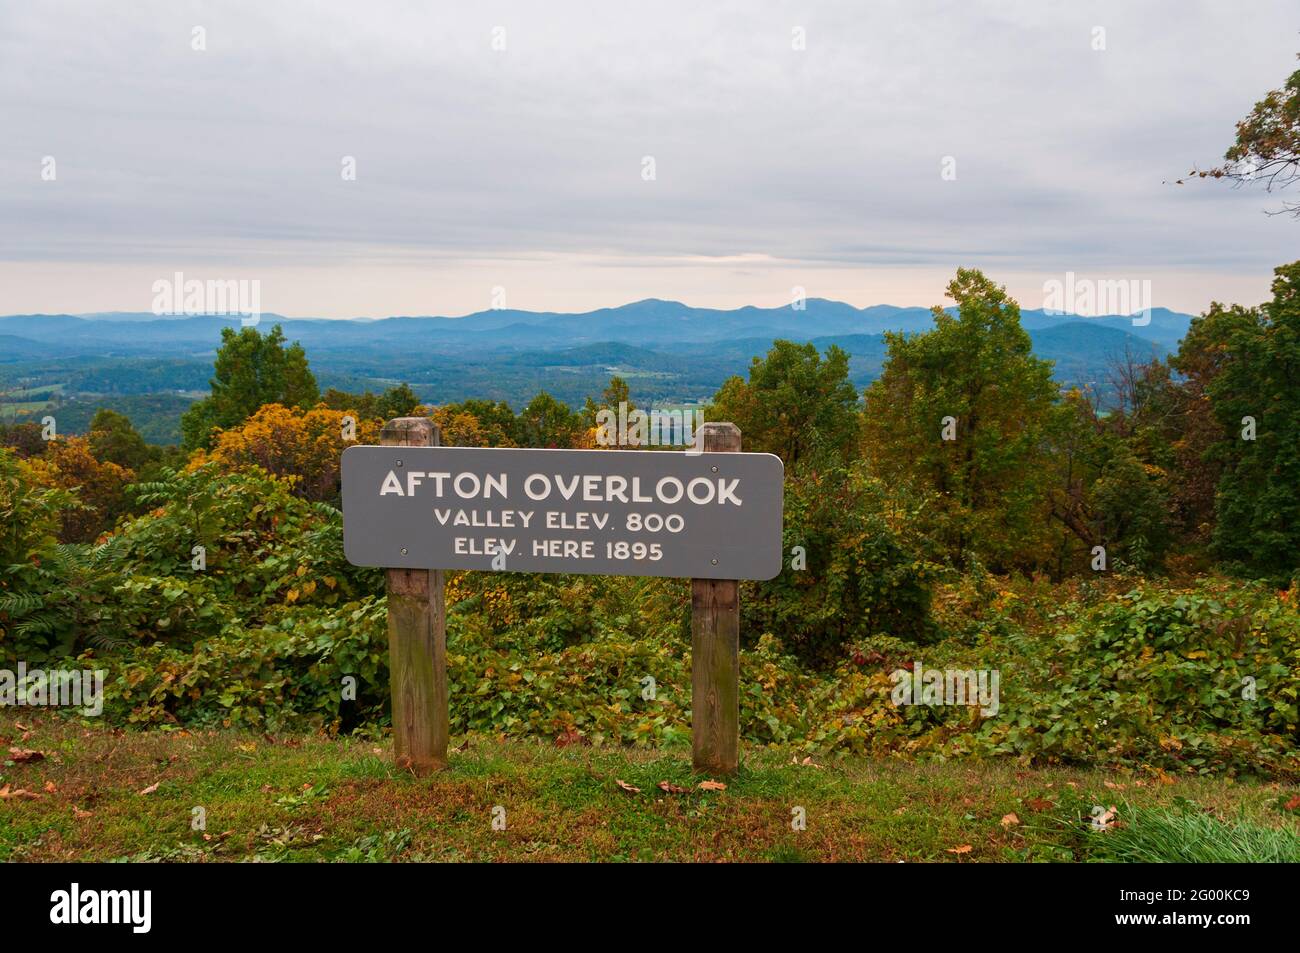 Afton overlook in the Blue Ridge mountains, or Blue Ridge Parkway, part of the Appalachian mountain chain near Afton Virginia, USA. Stock Photo